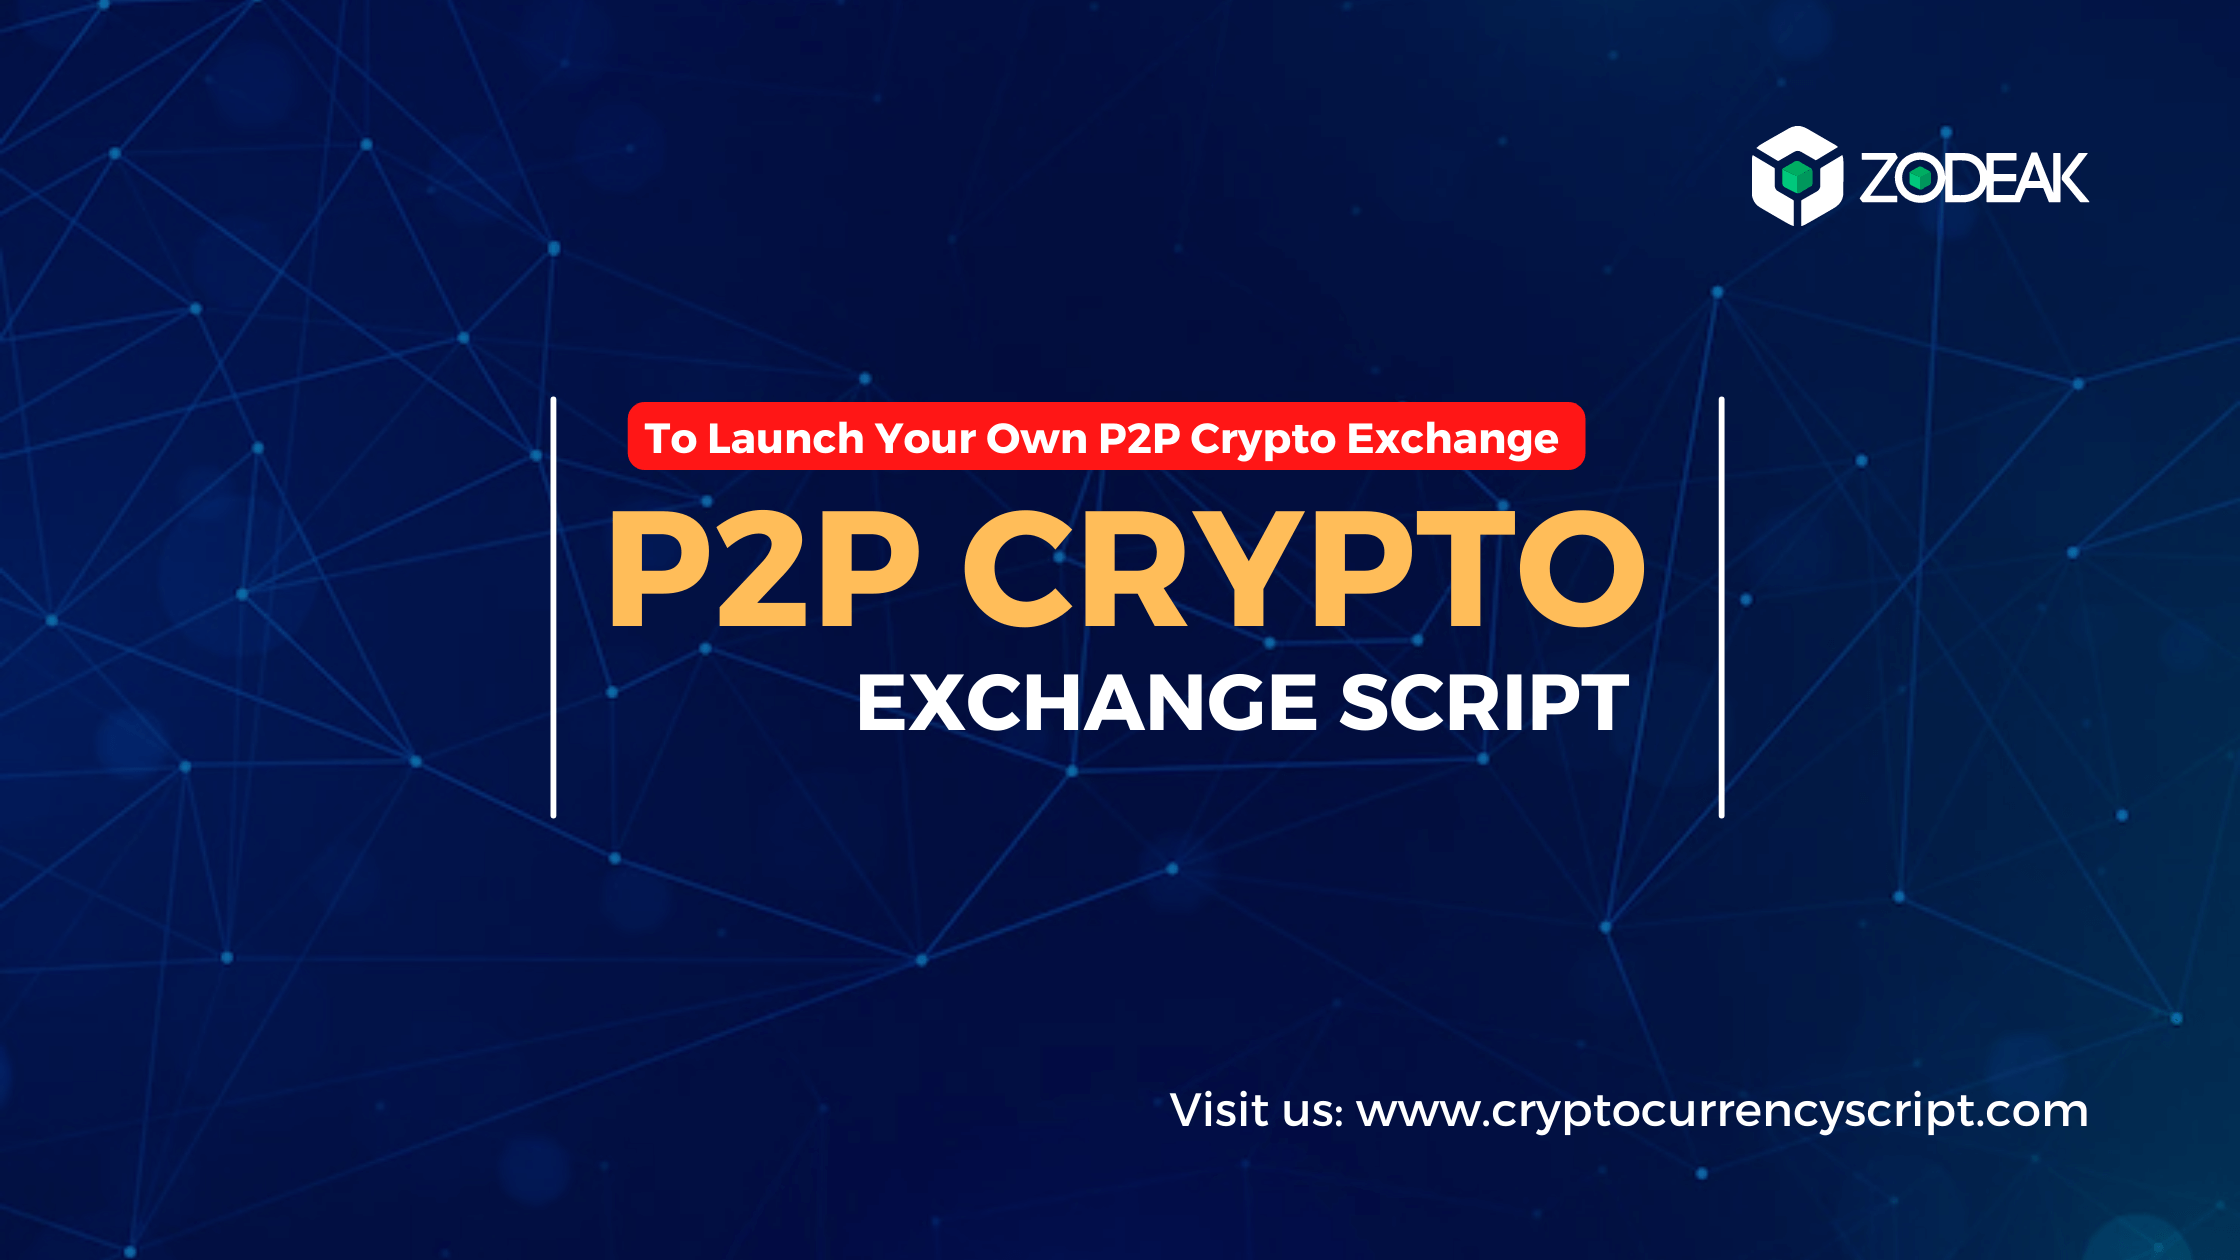 P2P Cryptocurrency Exchange Script | Zodeak